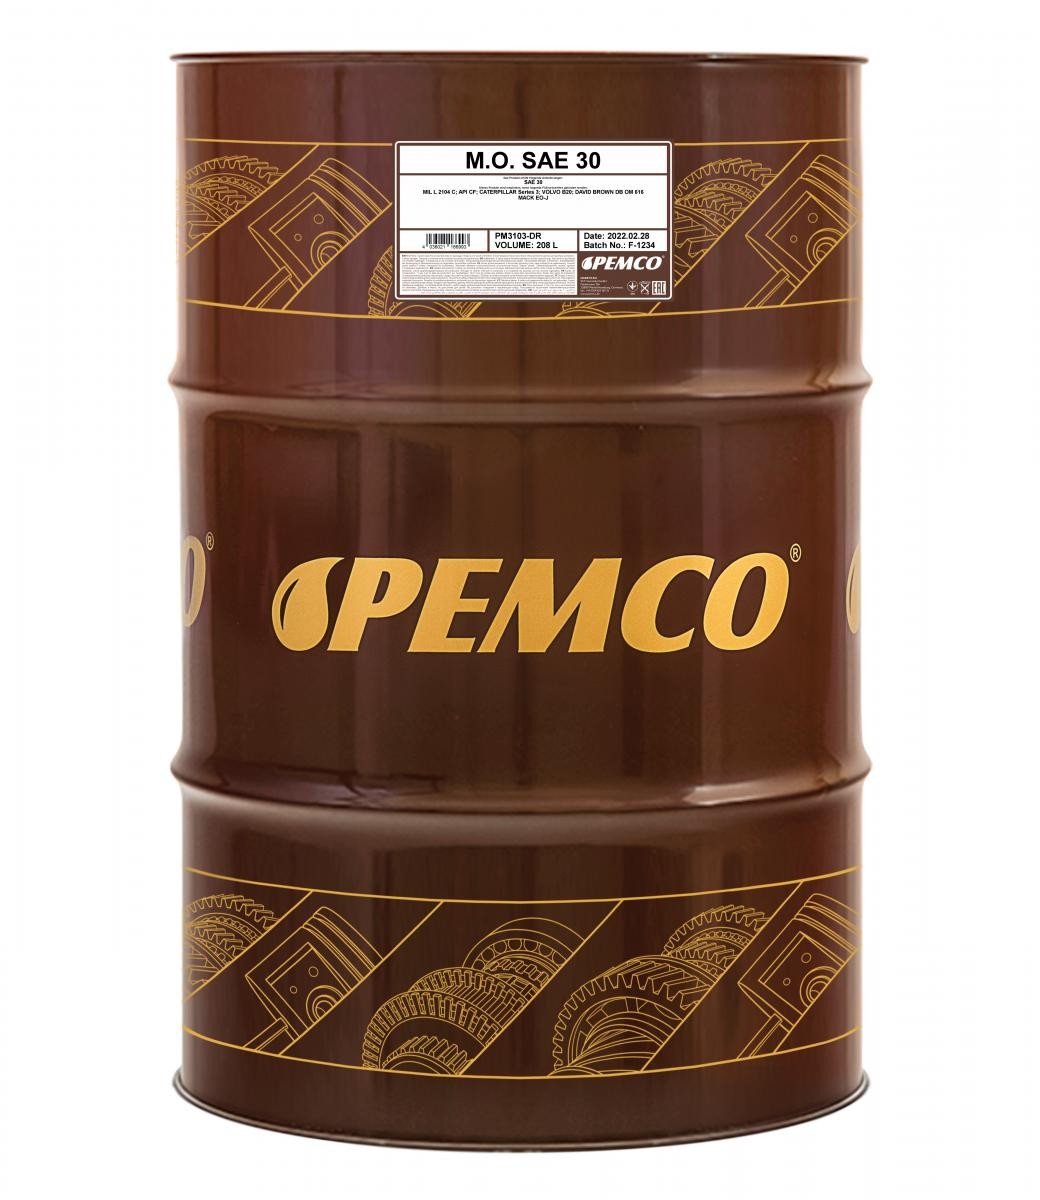 Auto oil API SD PEMCO - PM3103-DR M.O. SAE 30